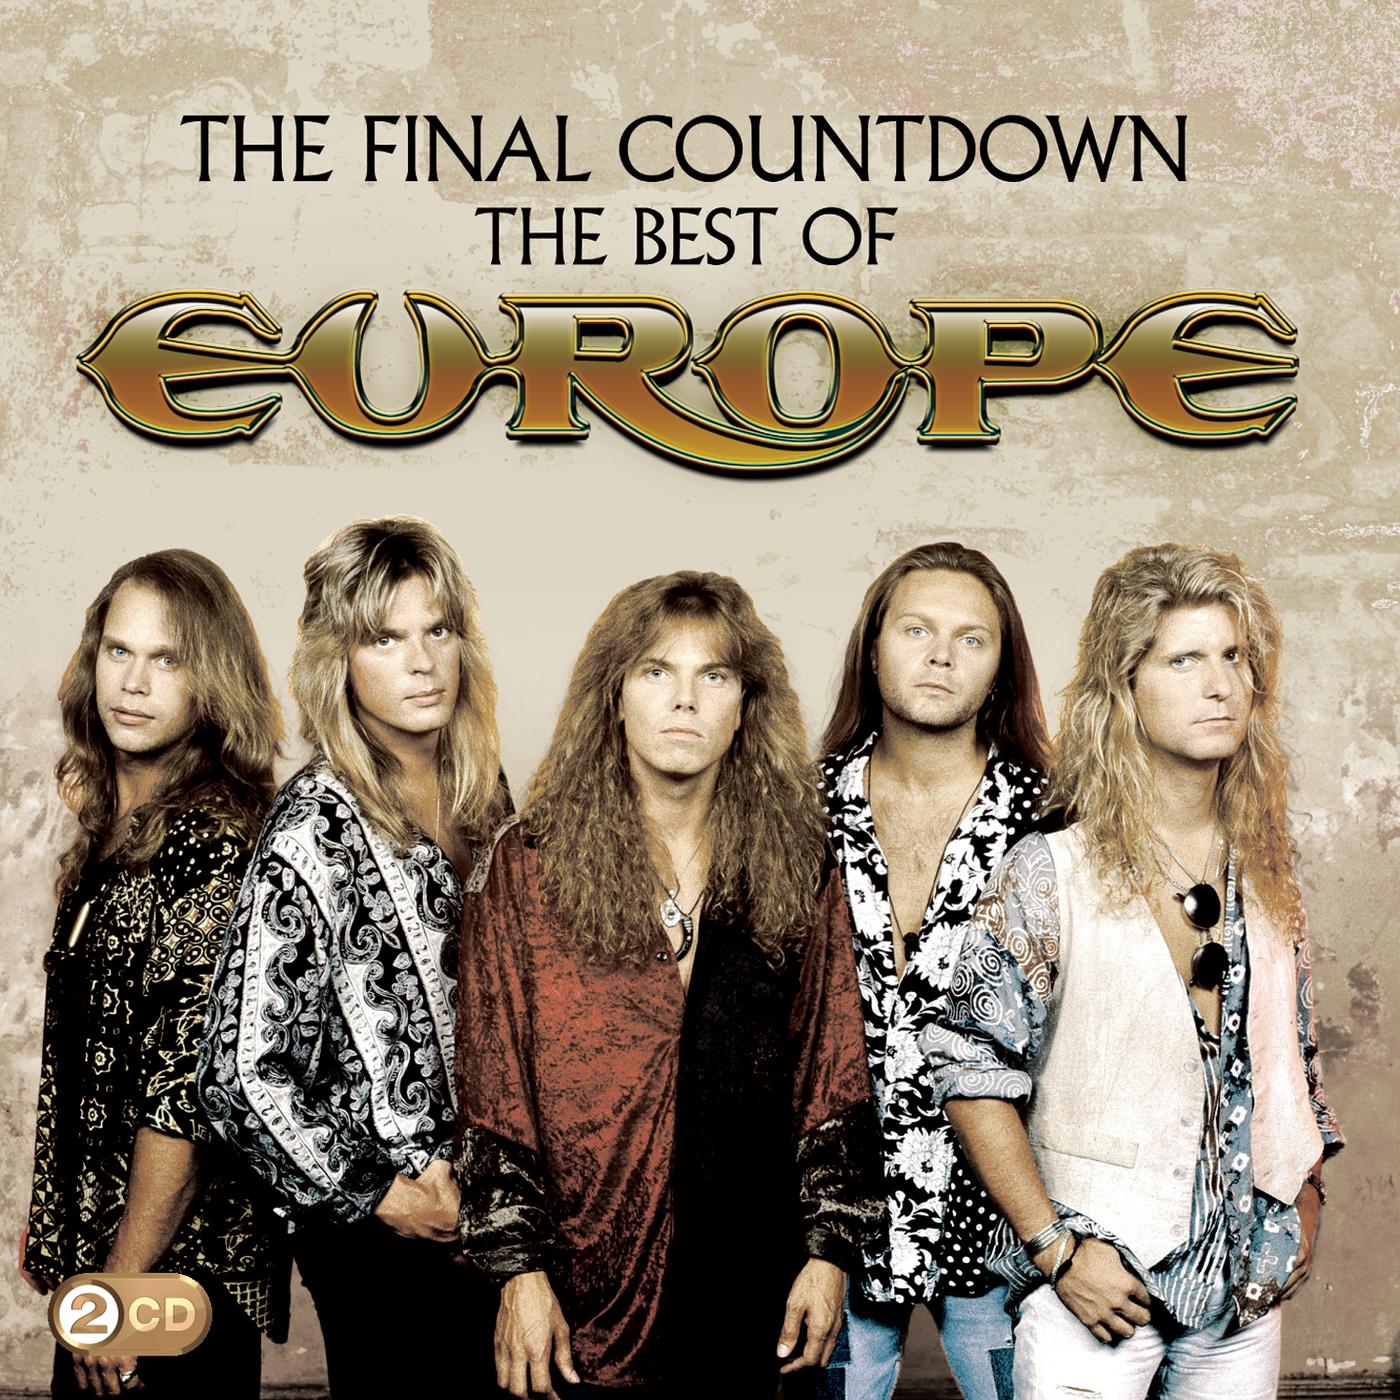 Europa final. Europe группа 1999. Группа Европа the Final Countdown. Europe the Final Countdown обложка. Europe the Final Countdown обложка альбома.